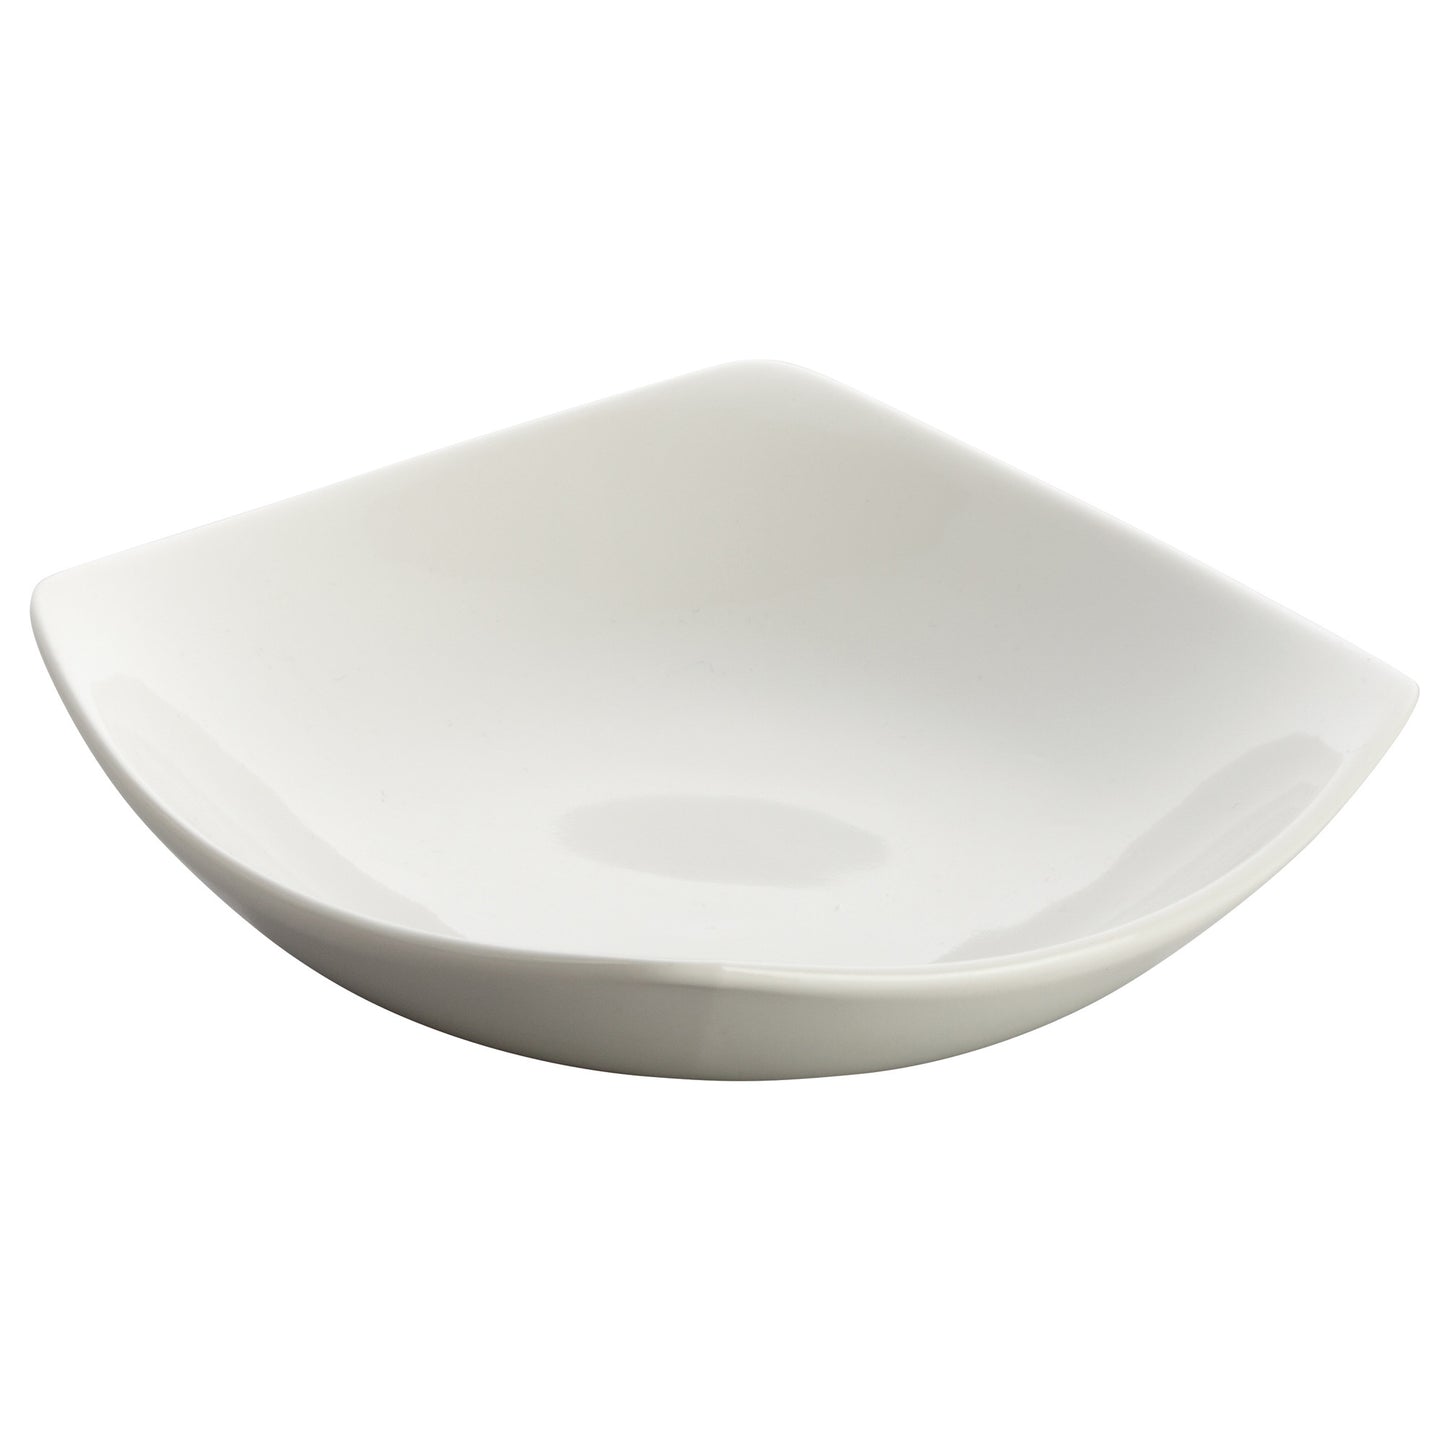 WDP013-104 - 6"Sq Porcelain Square Plate, Bright White, 36 pcs/case